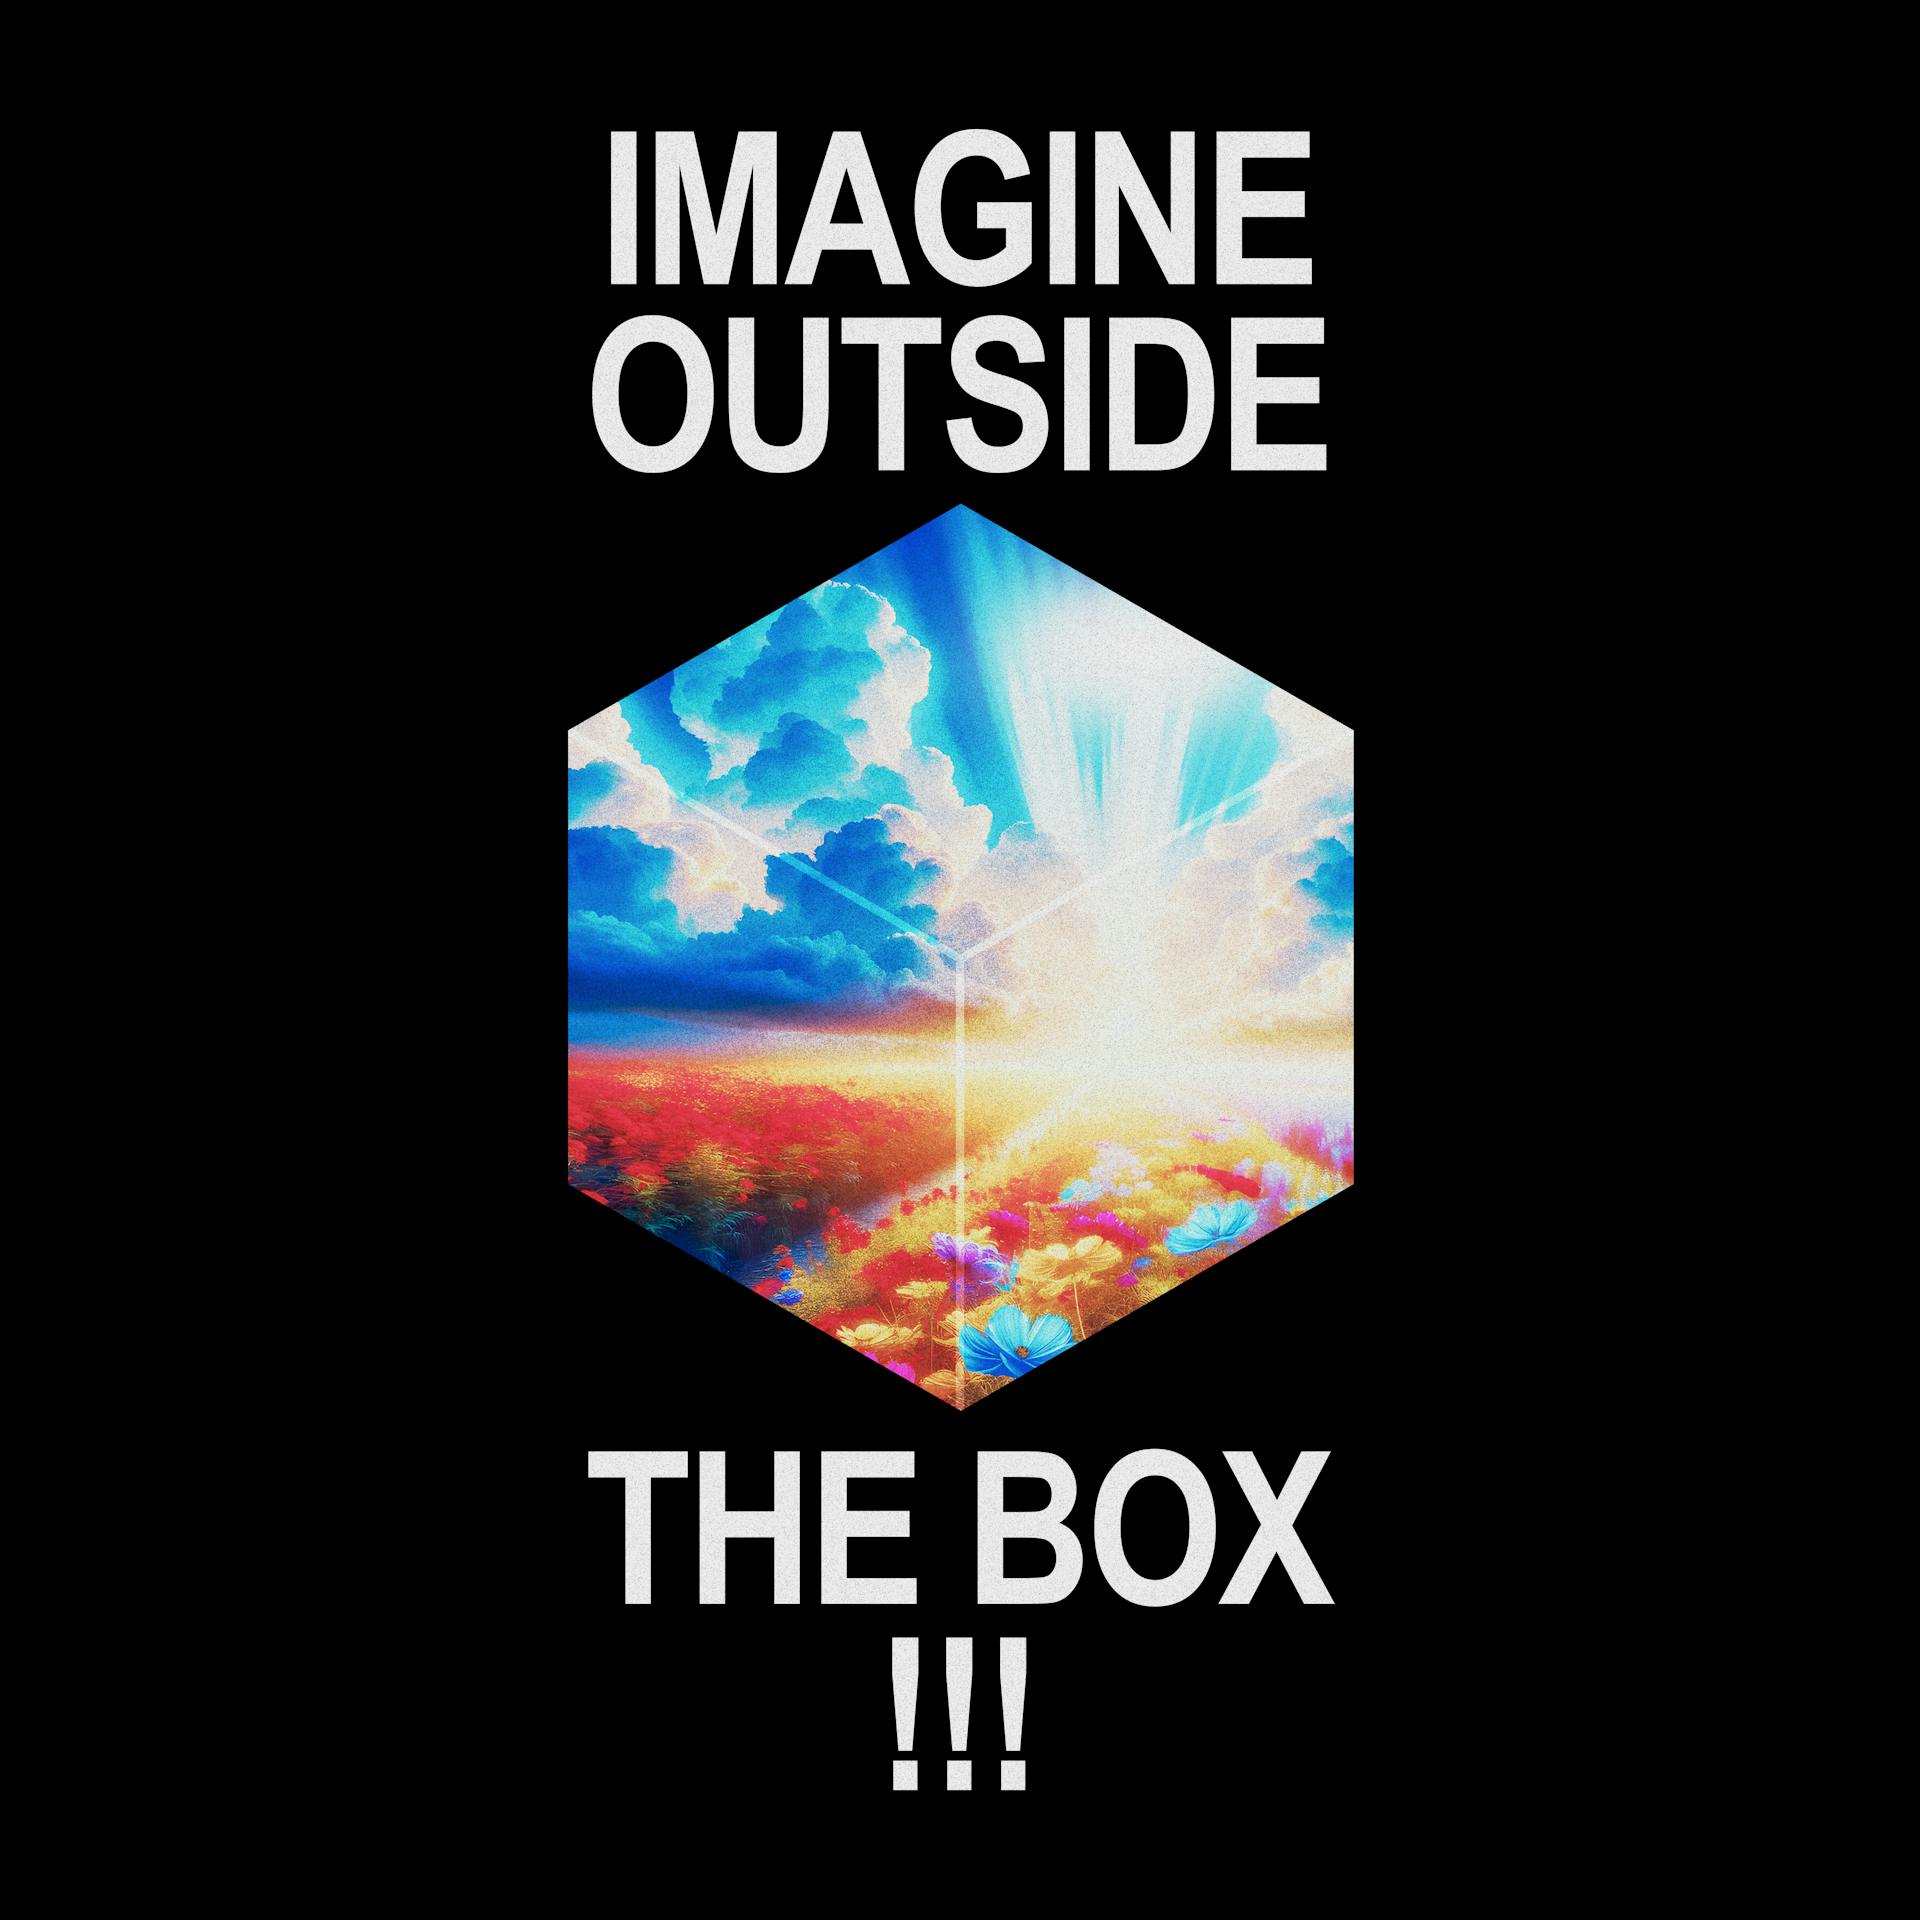 imagine outside the box !!!